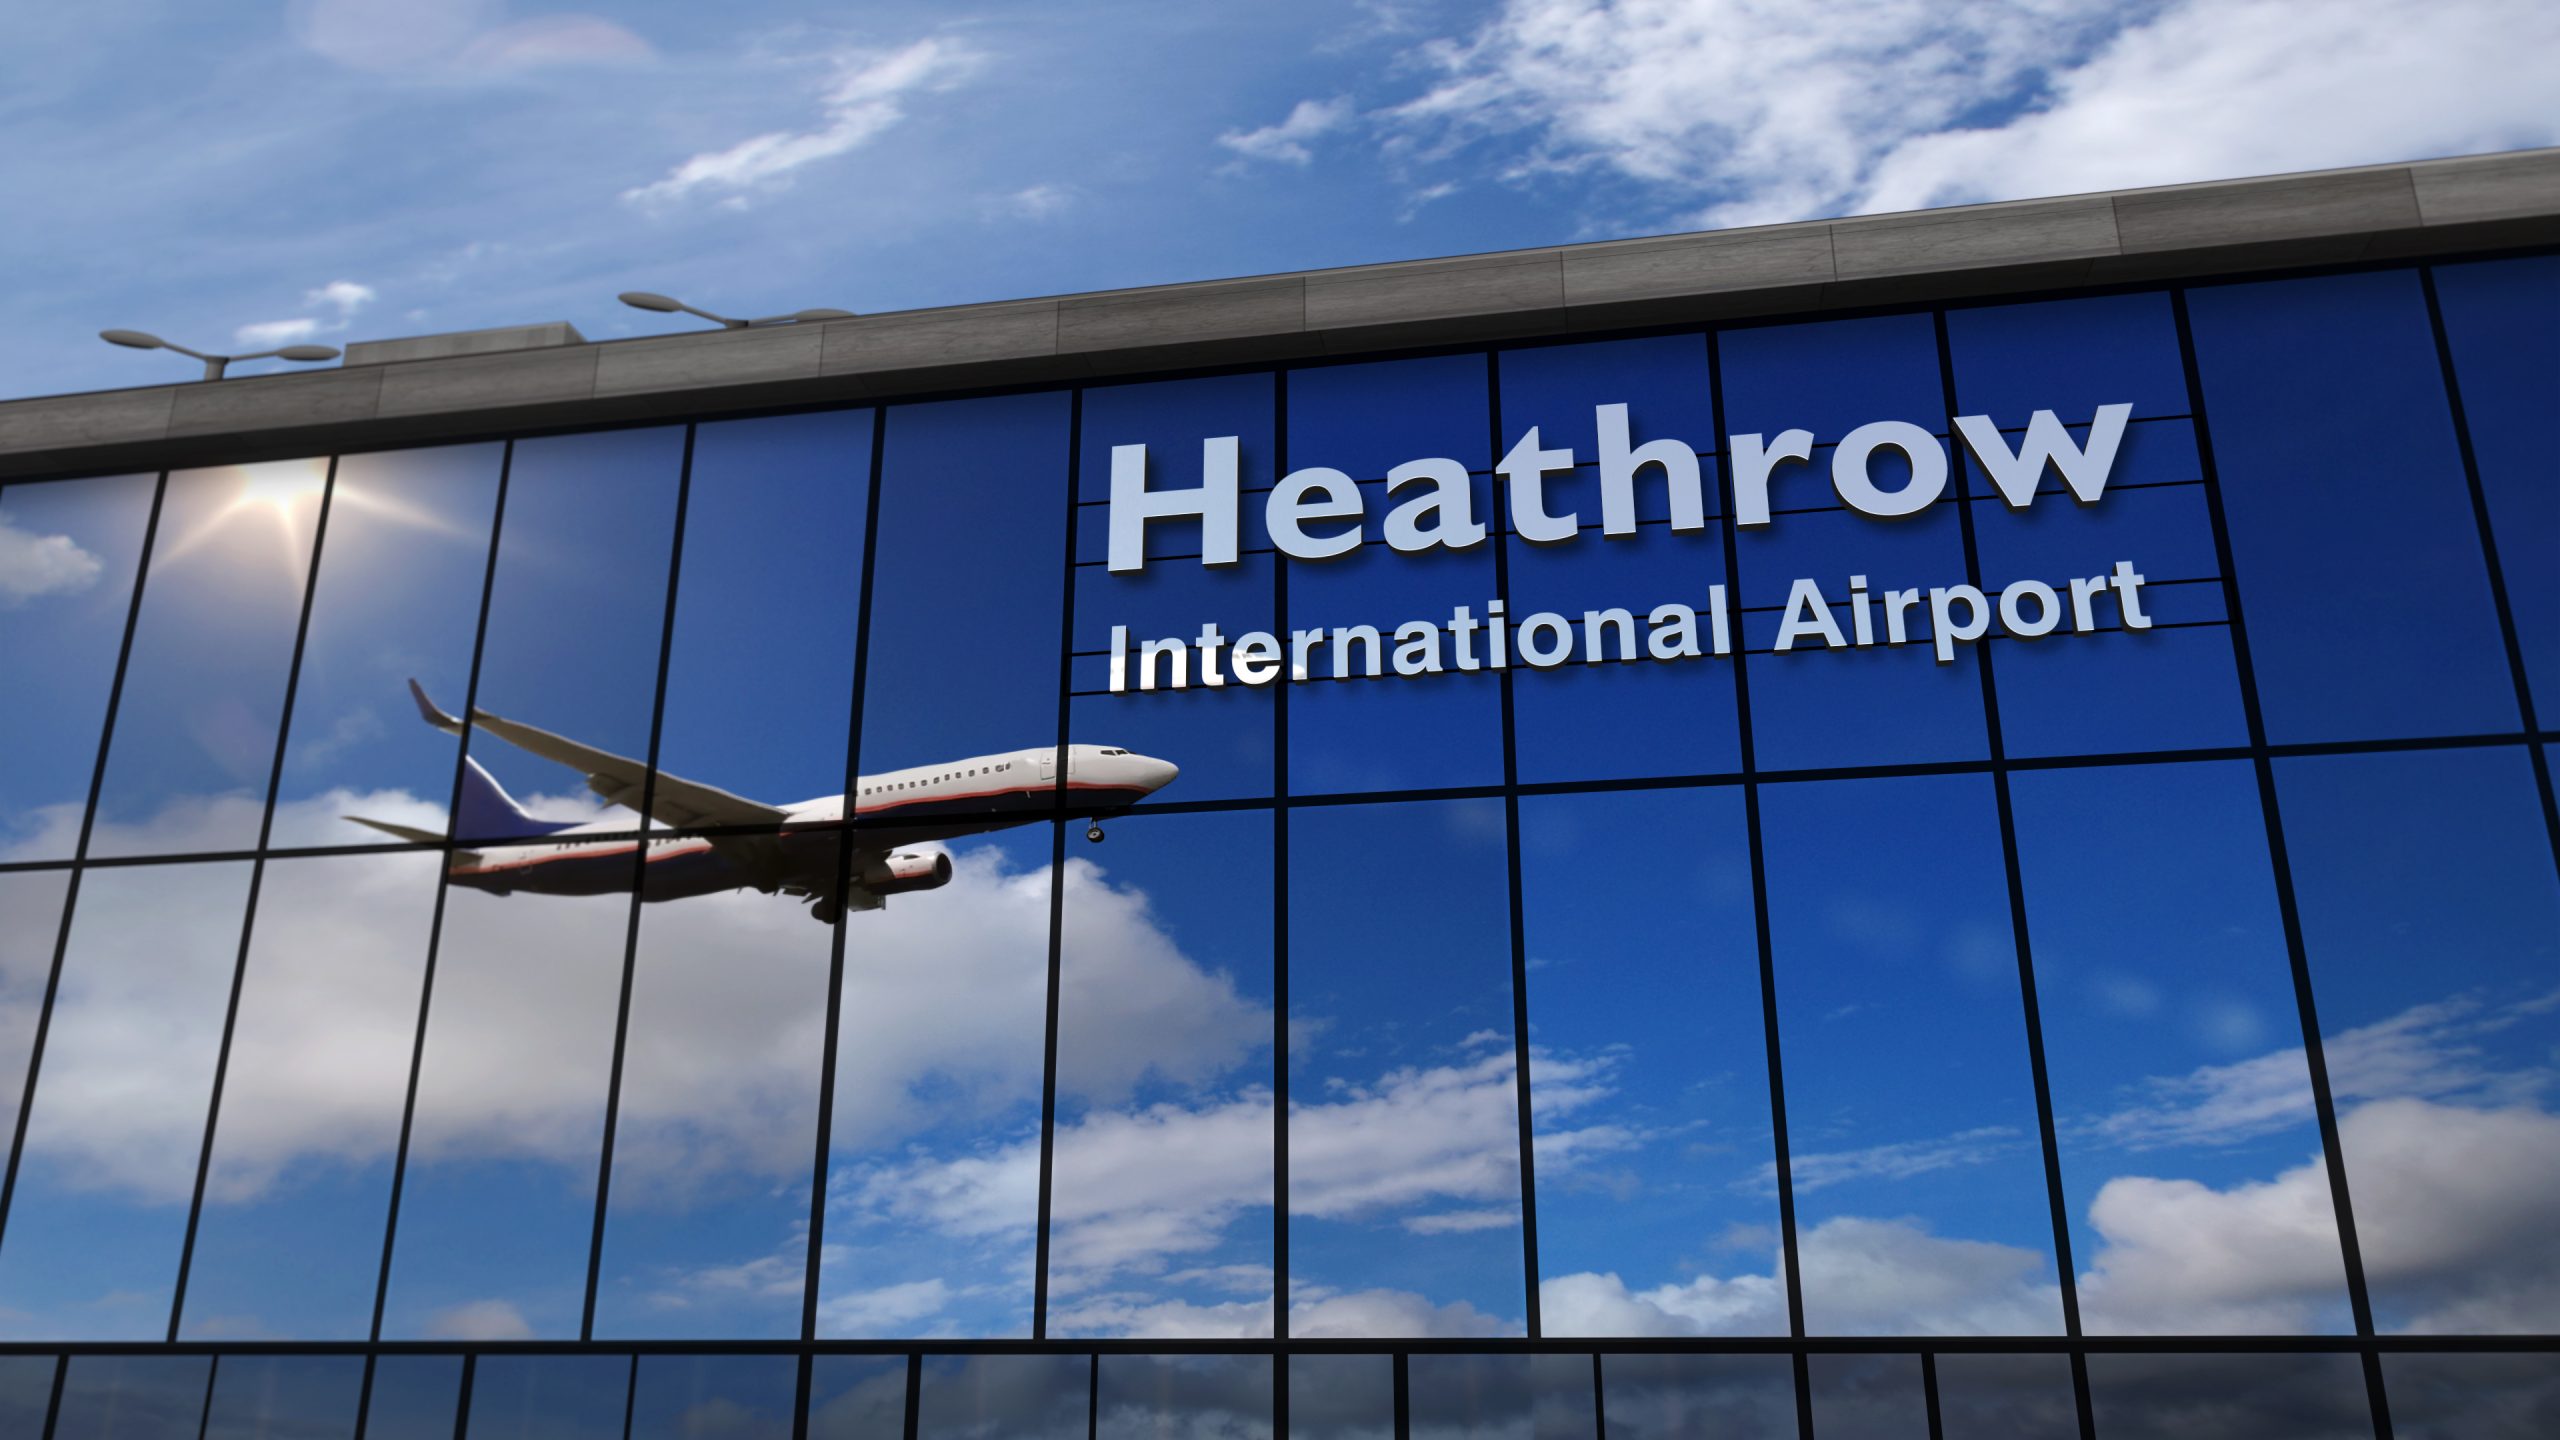 london city airport to heathrow